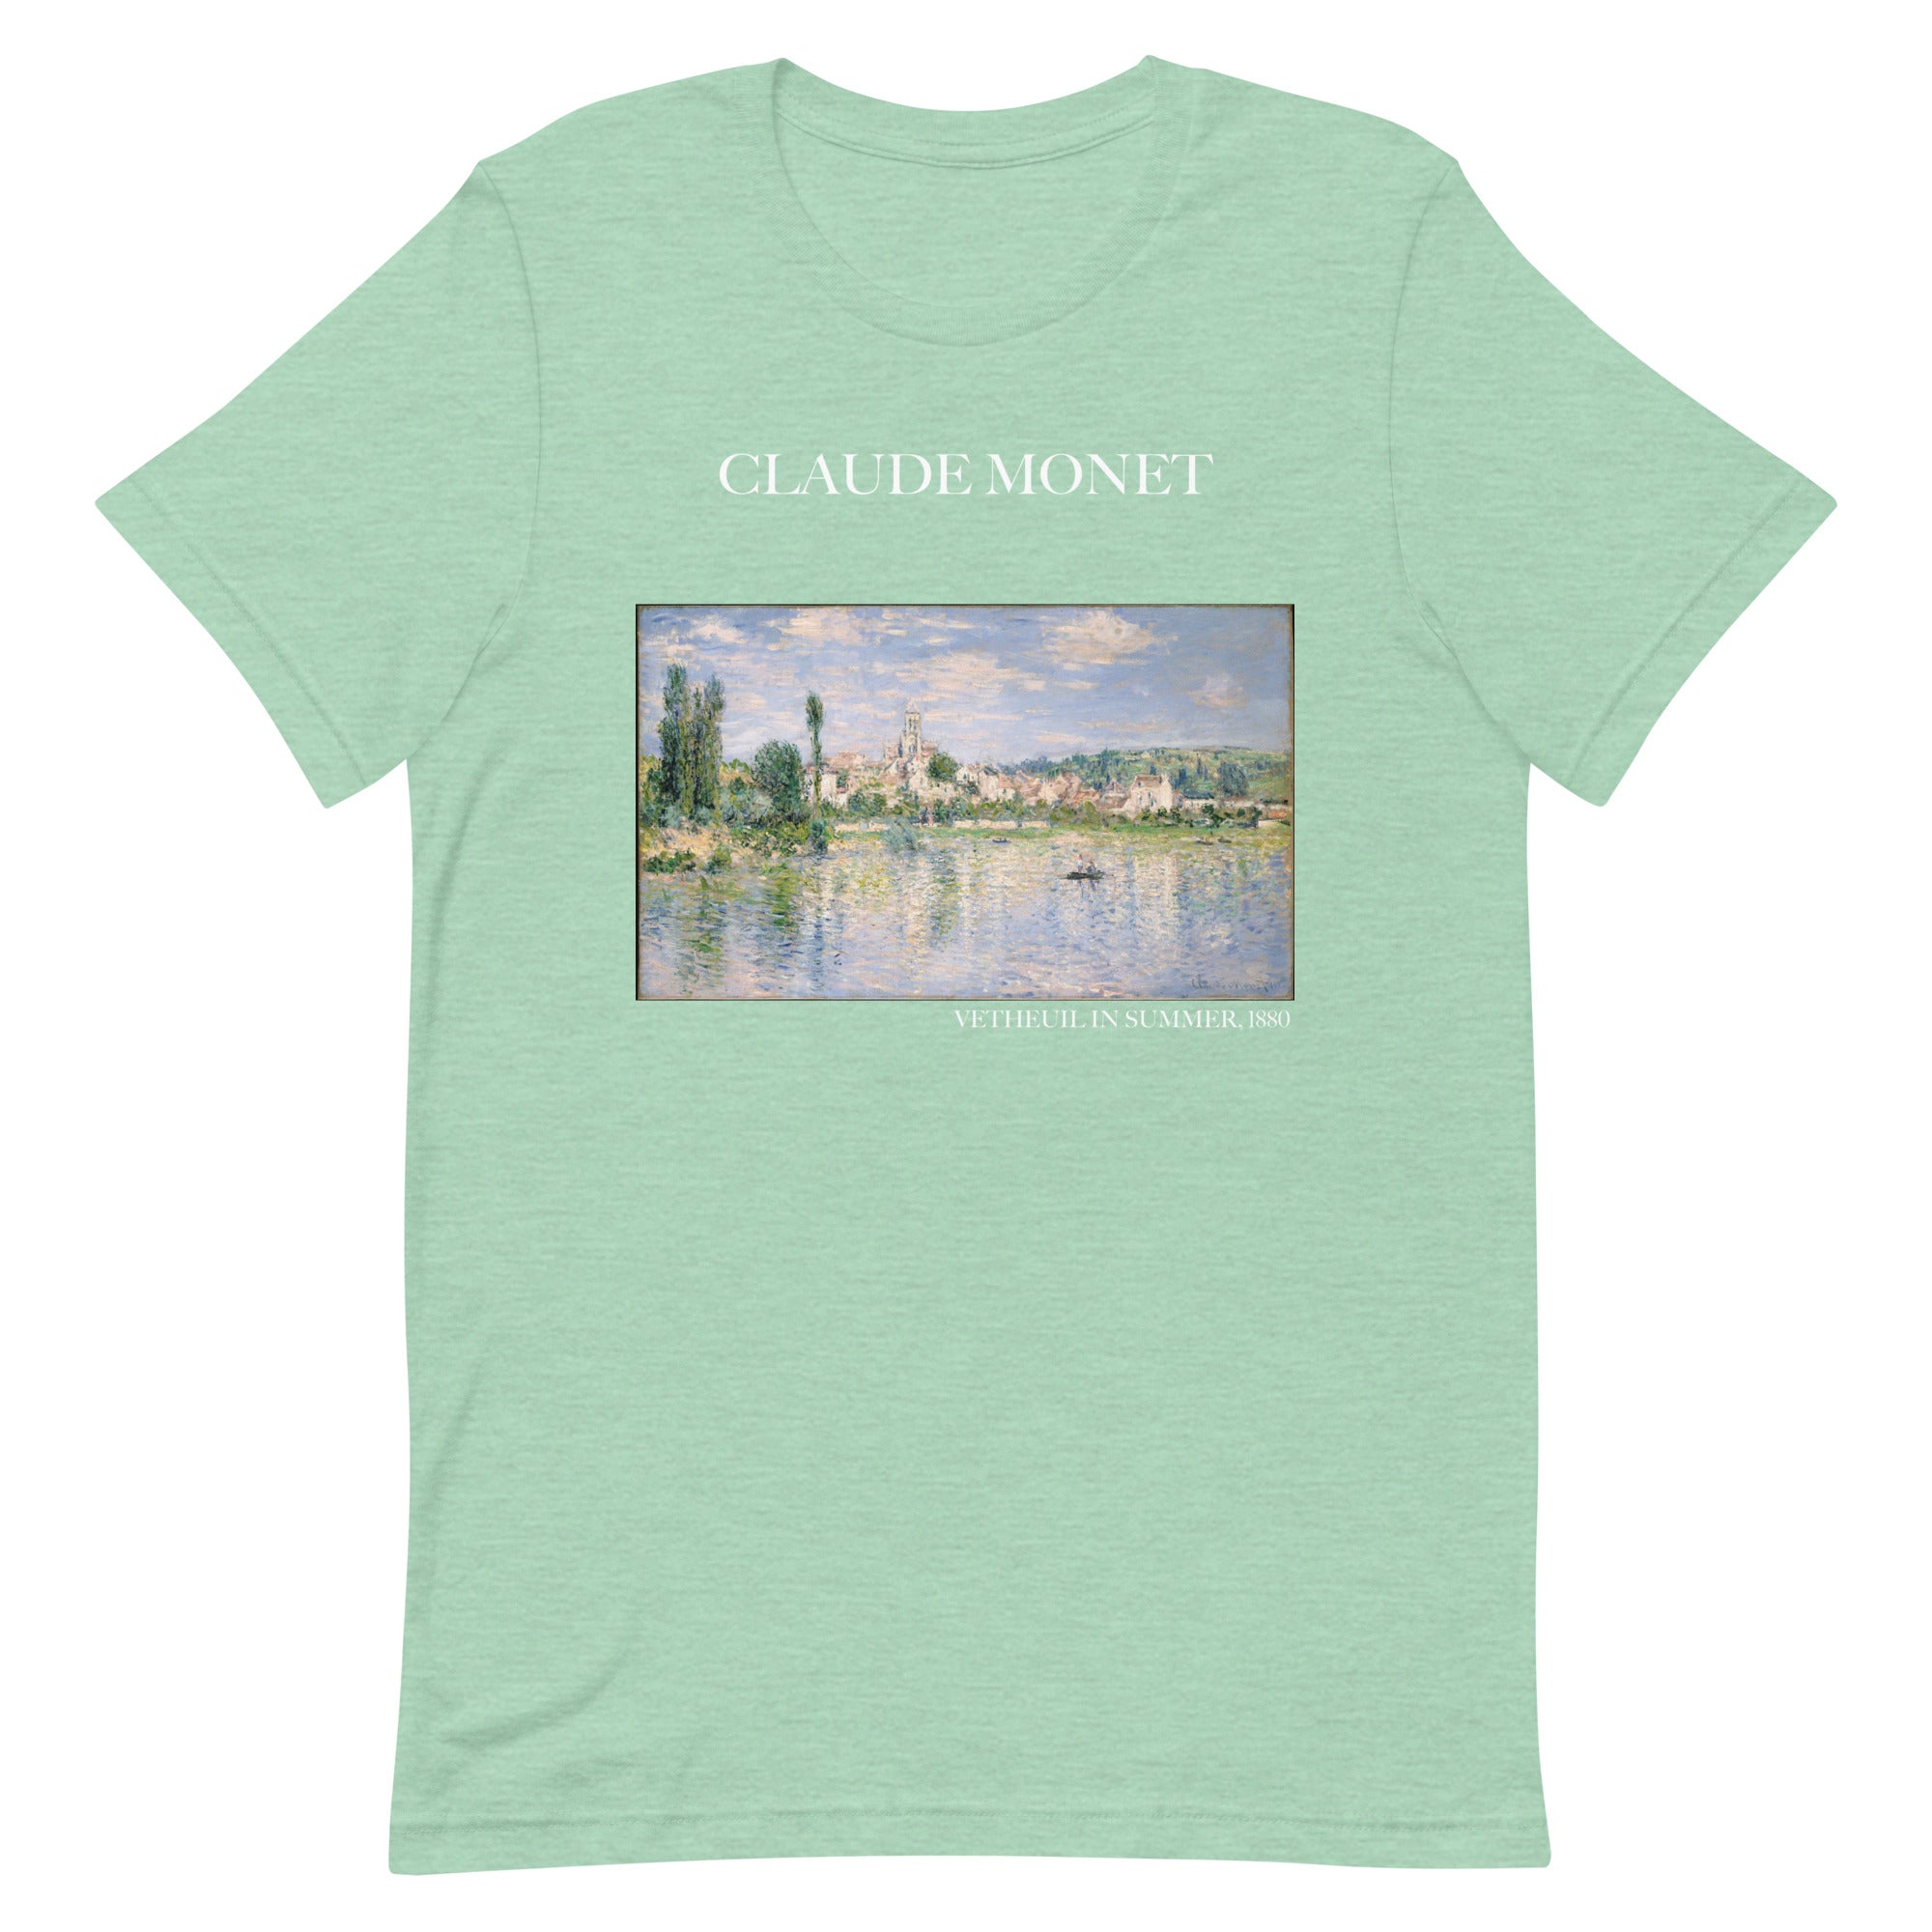 Claude Monet 'Vetheuil in Summer' Famous Painting T-Shirt | Unisex Classic Art Tee